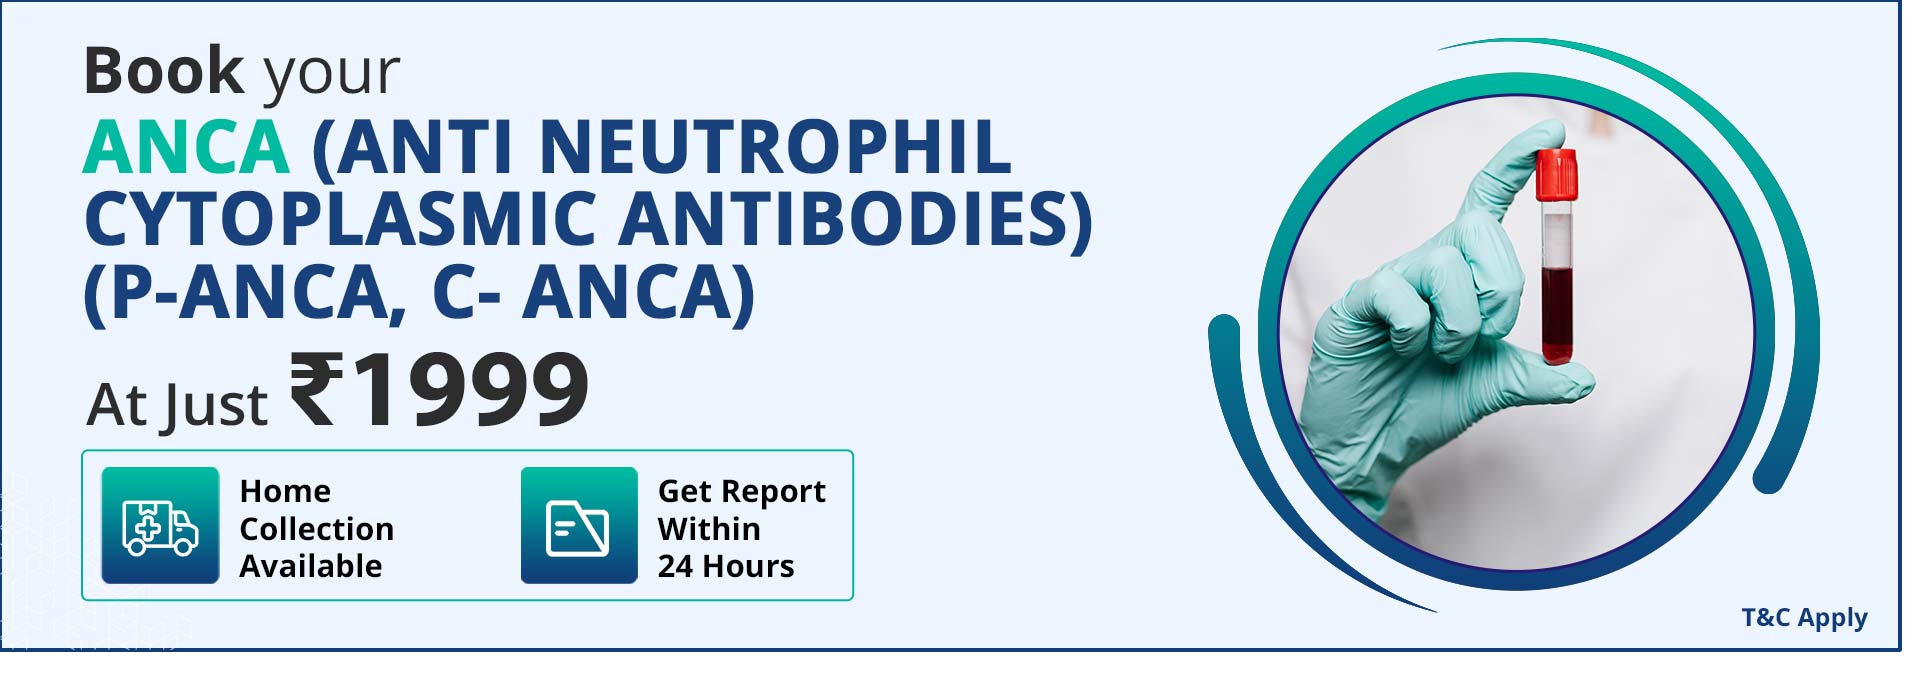 ANCA (Anti Neutrophil Cytoplasmic Antibodies) (P-ANCA, C- ANCA)